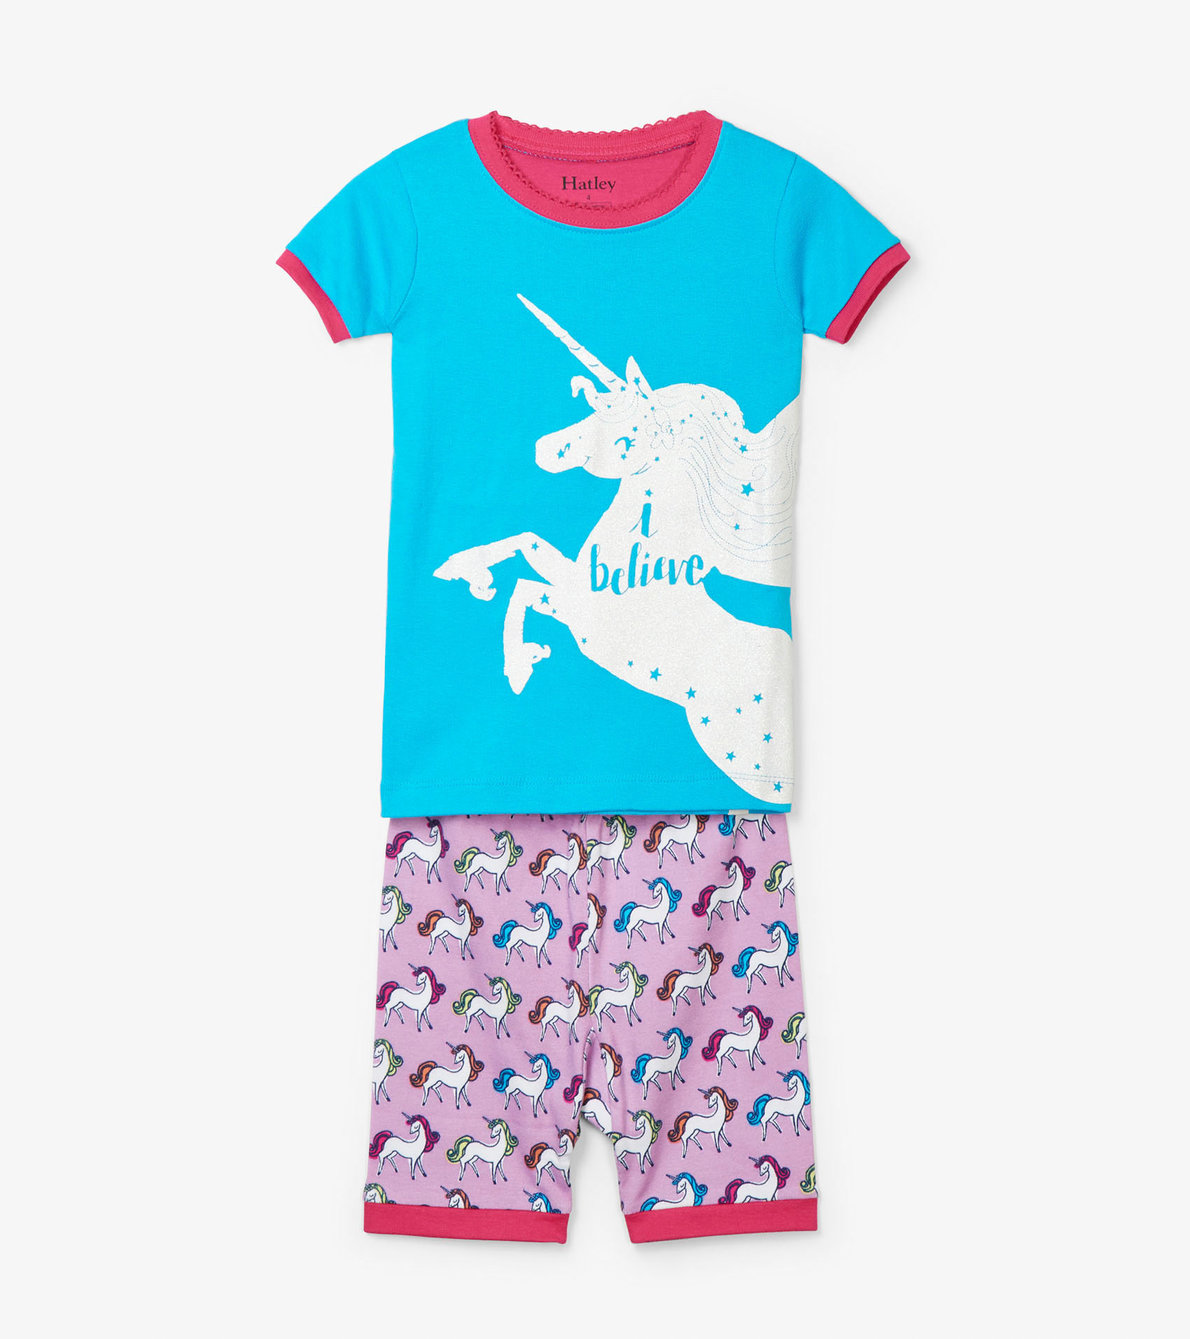 View larger image of Rainbow Unicorns Appliqué Short Pajama Set